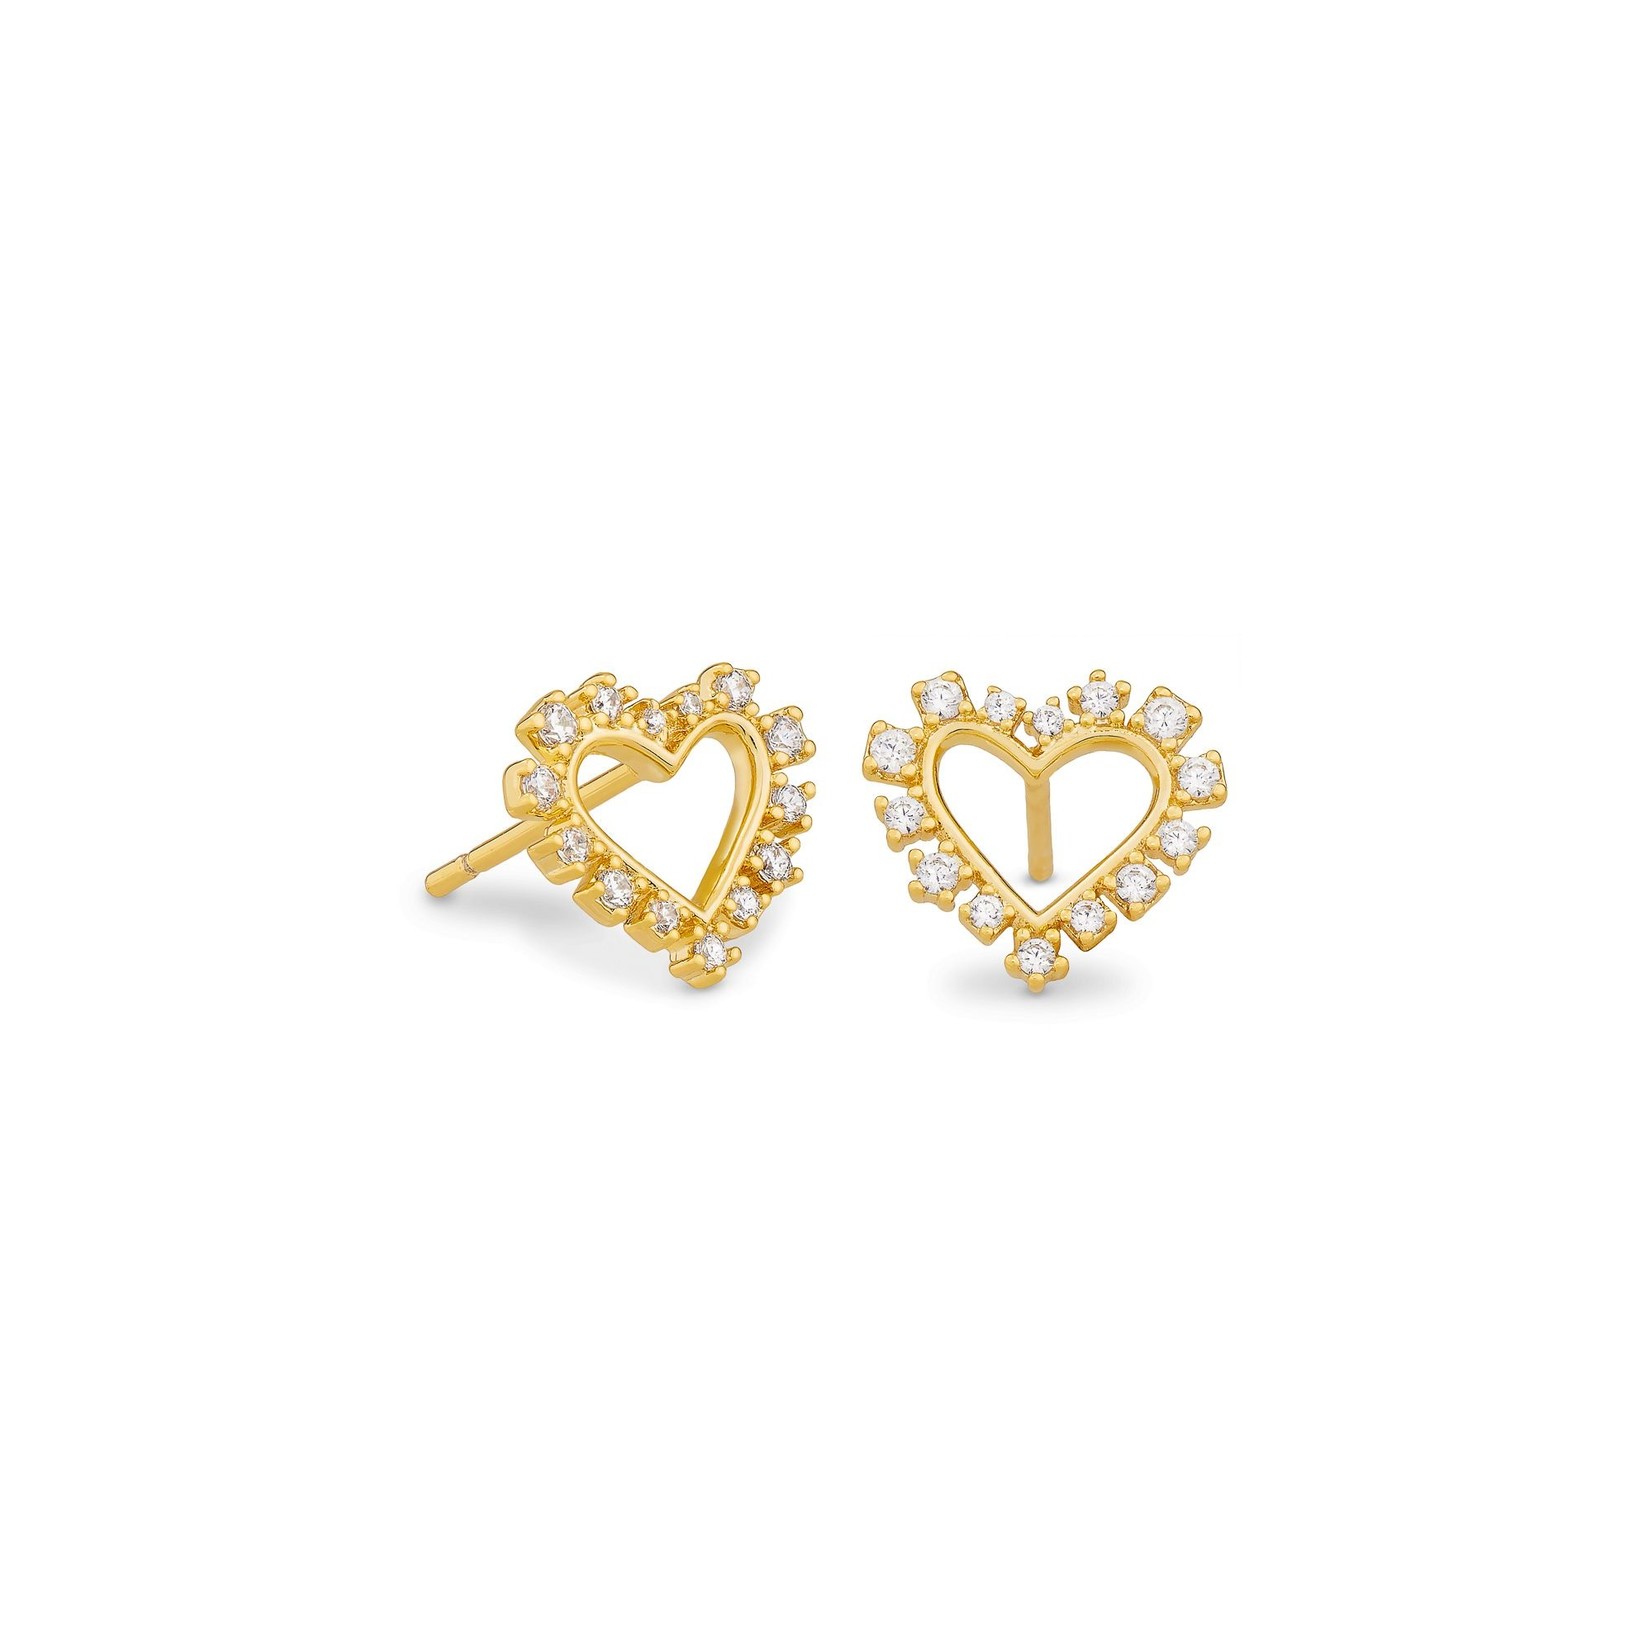 The Ari Heart Stud Earrings in White Crystal